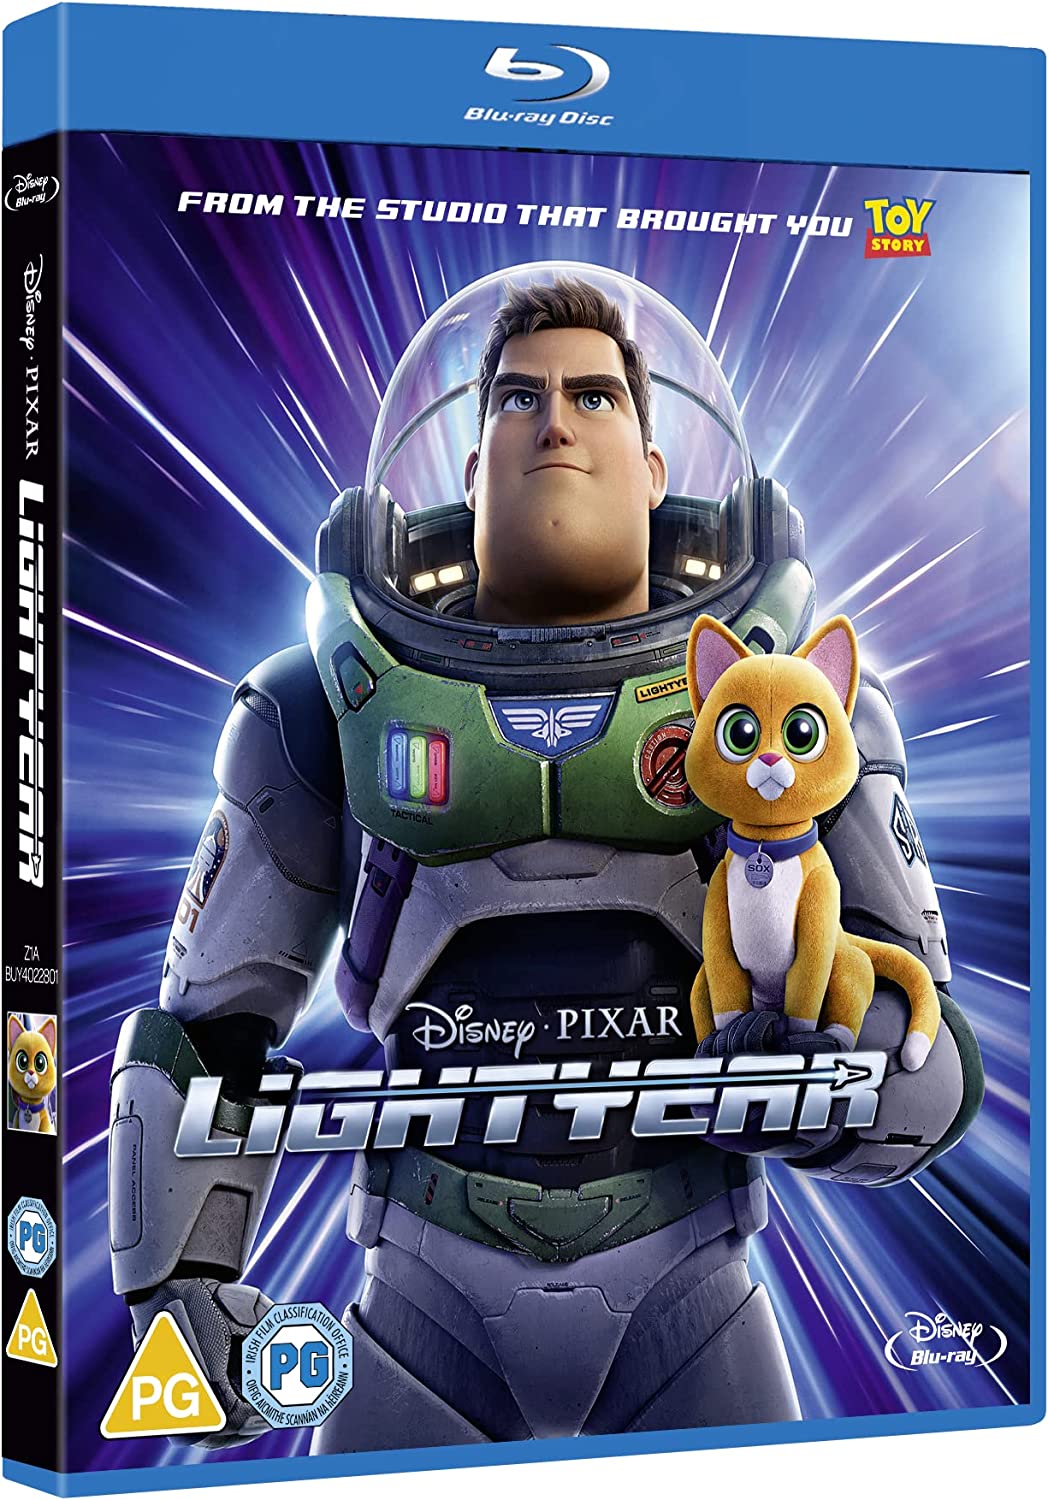 Disney & Pixar's Lightyear - Action Adventure [Blu-ray] [Region Free]